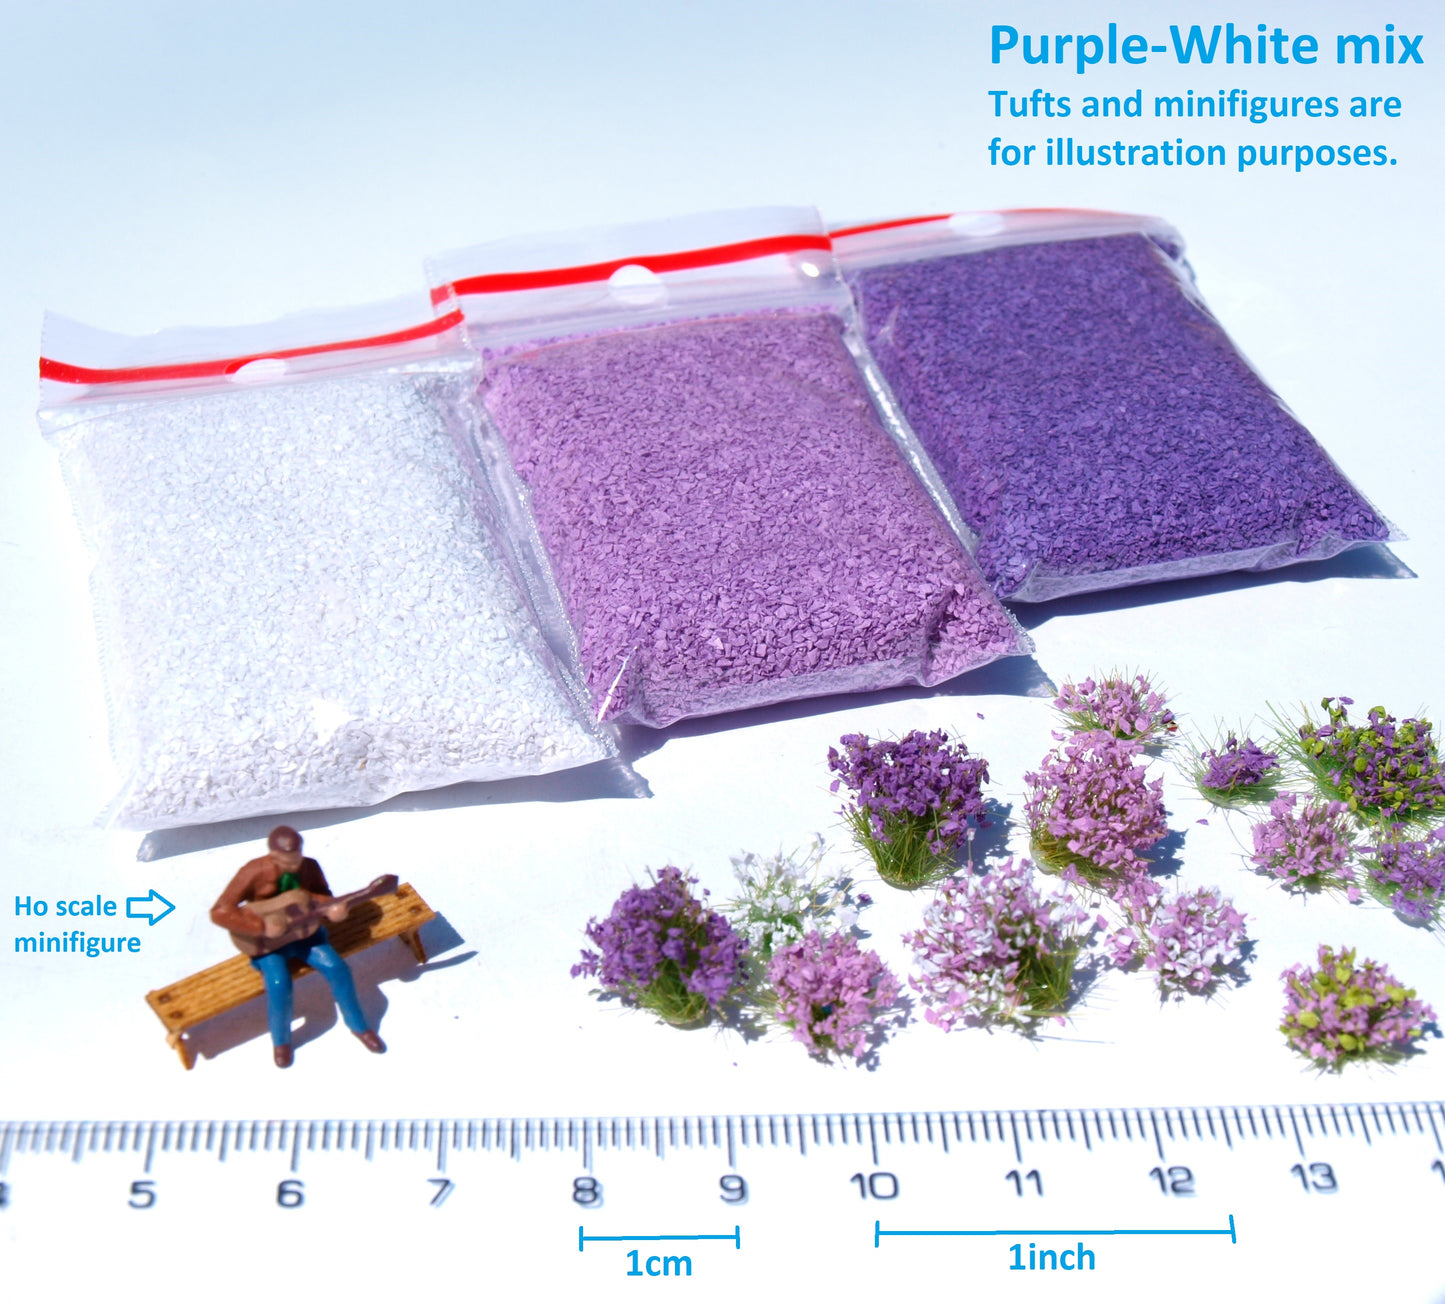 naaron88 Miniature Model Leaves Petal Purple Lavender mix dollhouse diorama scenery